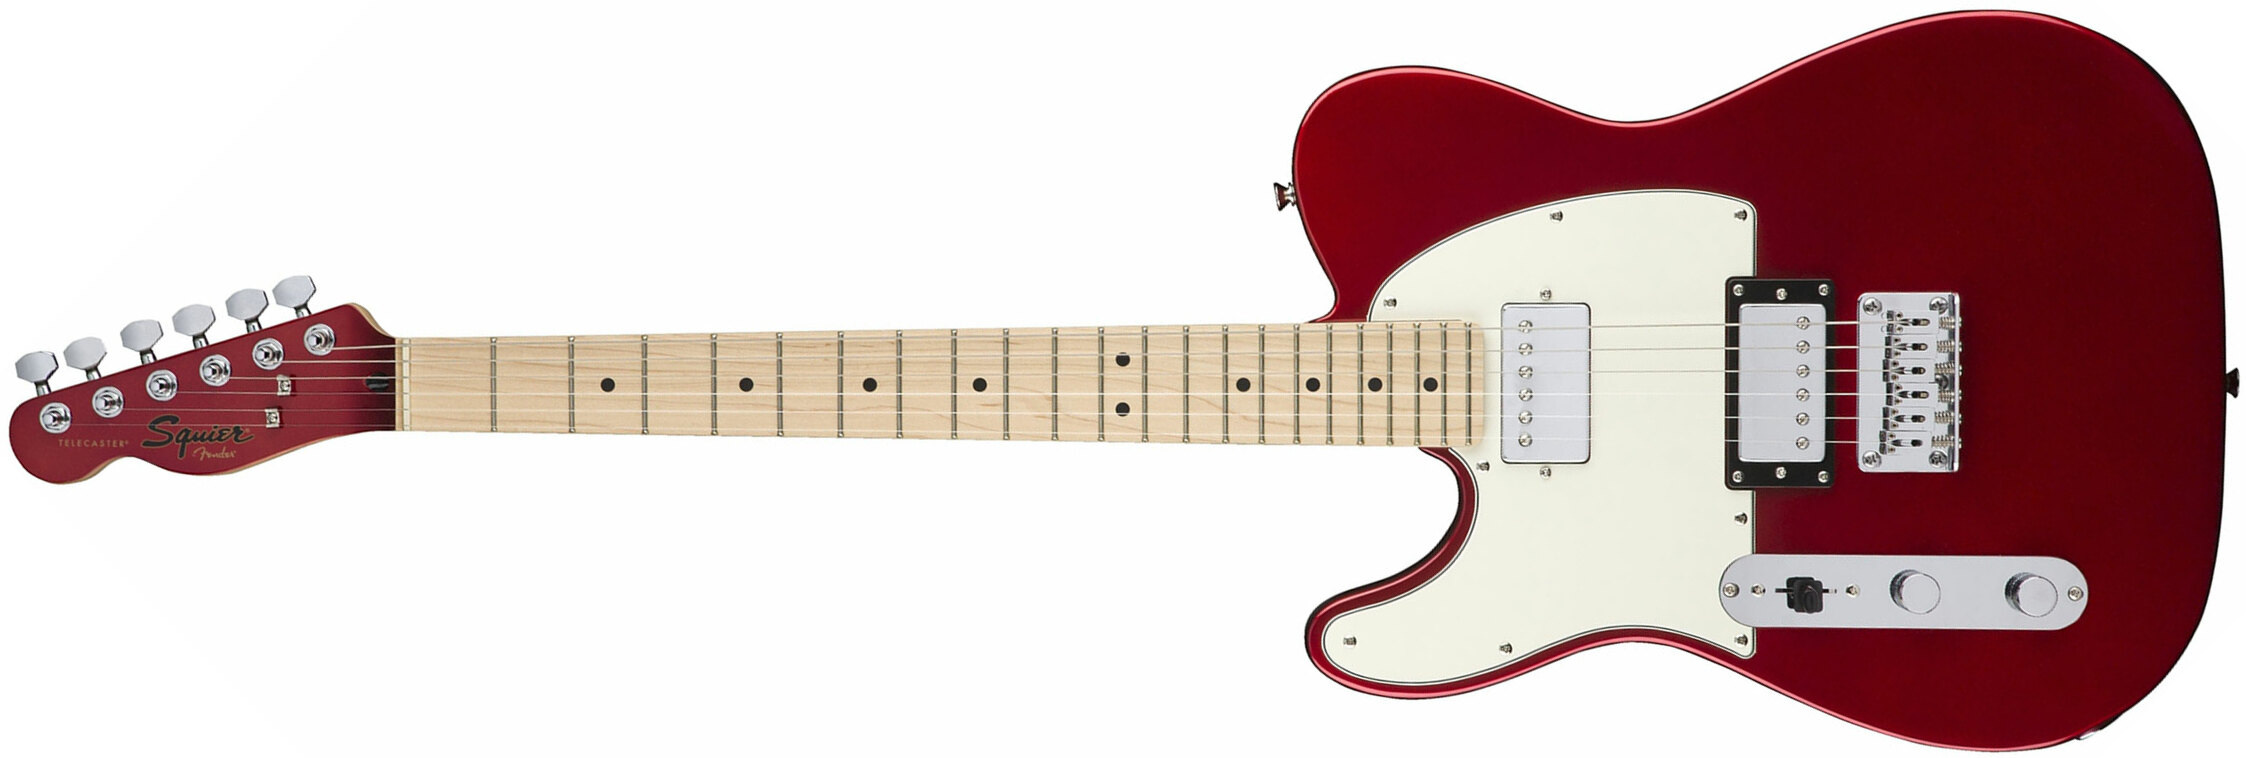 Squier Tele Contemporary Hh Lh Gaucher Mn - Dark Metallic Red - Left-handed electric guitar - Main picture